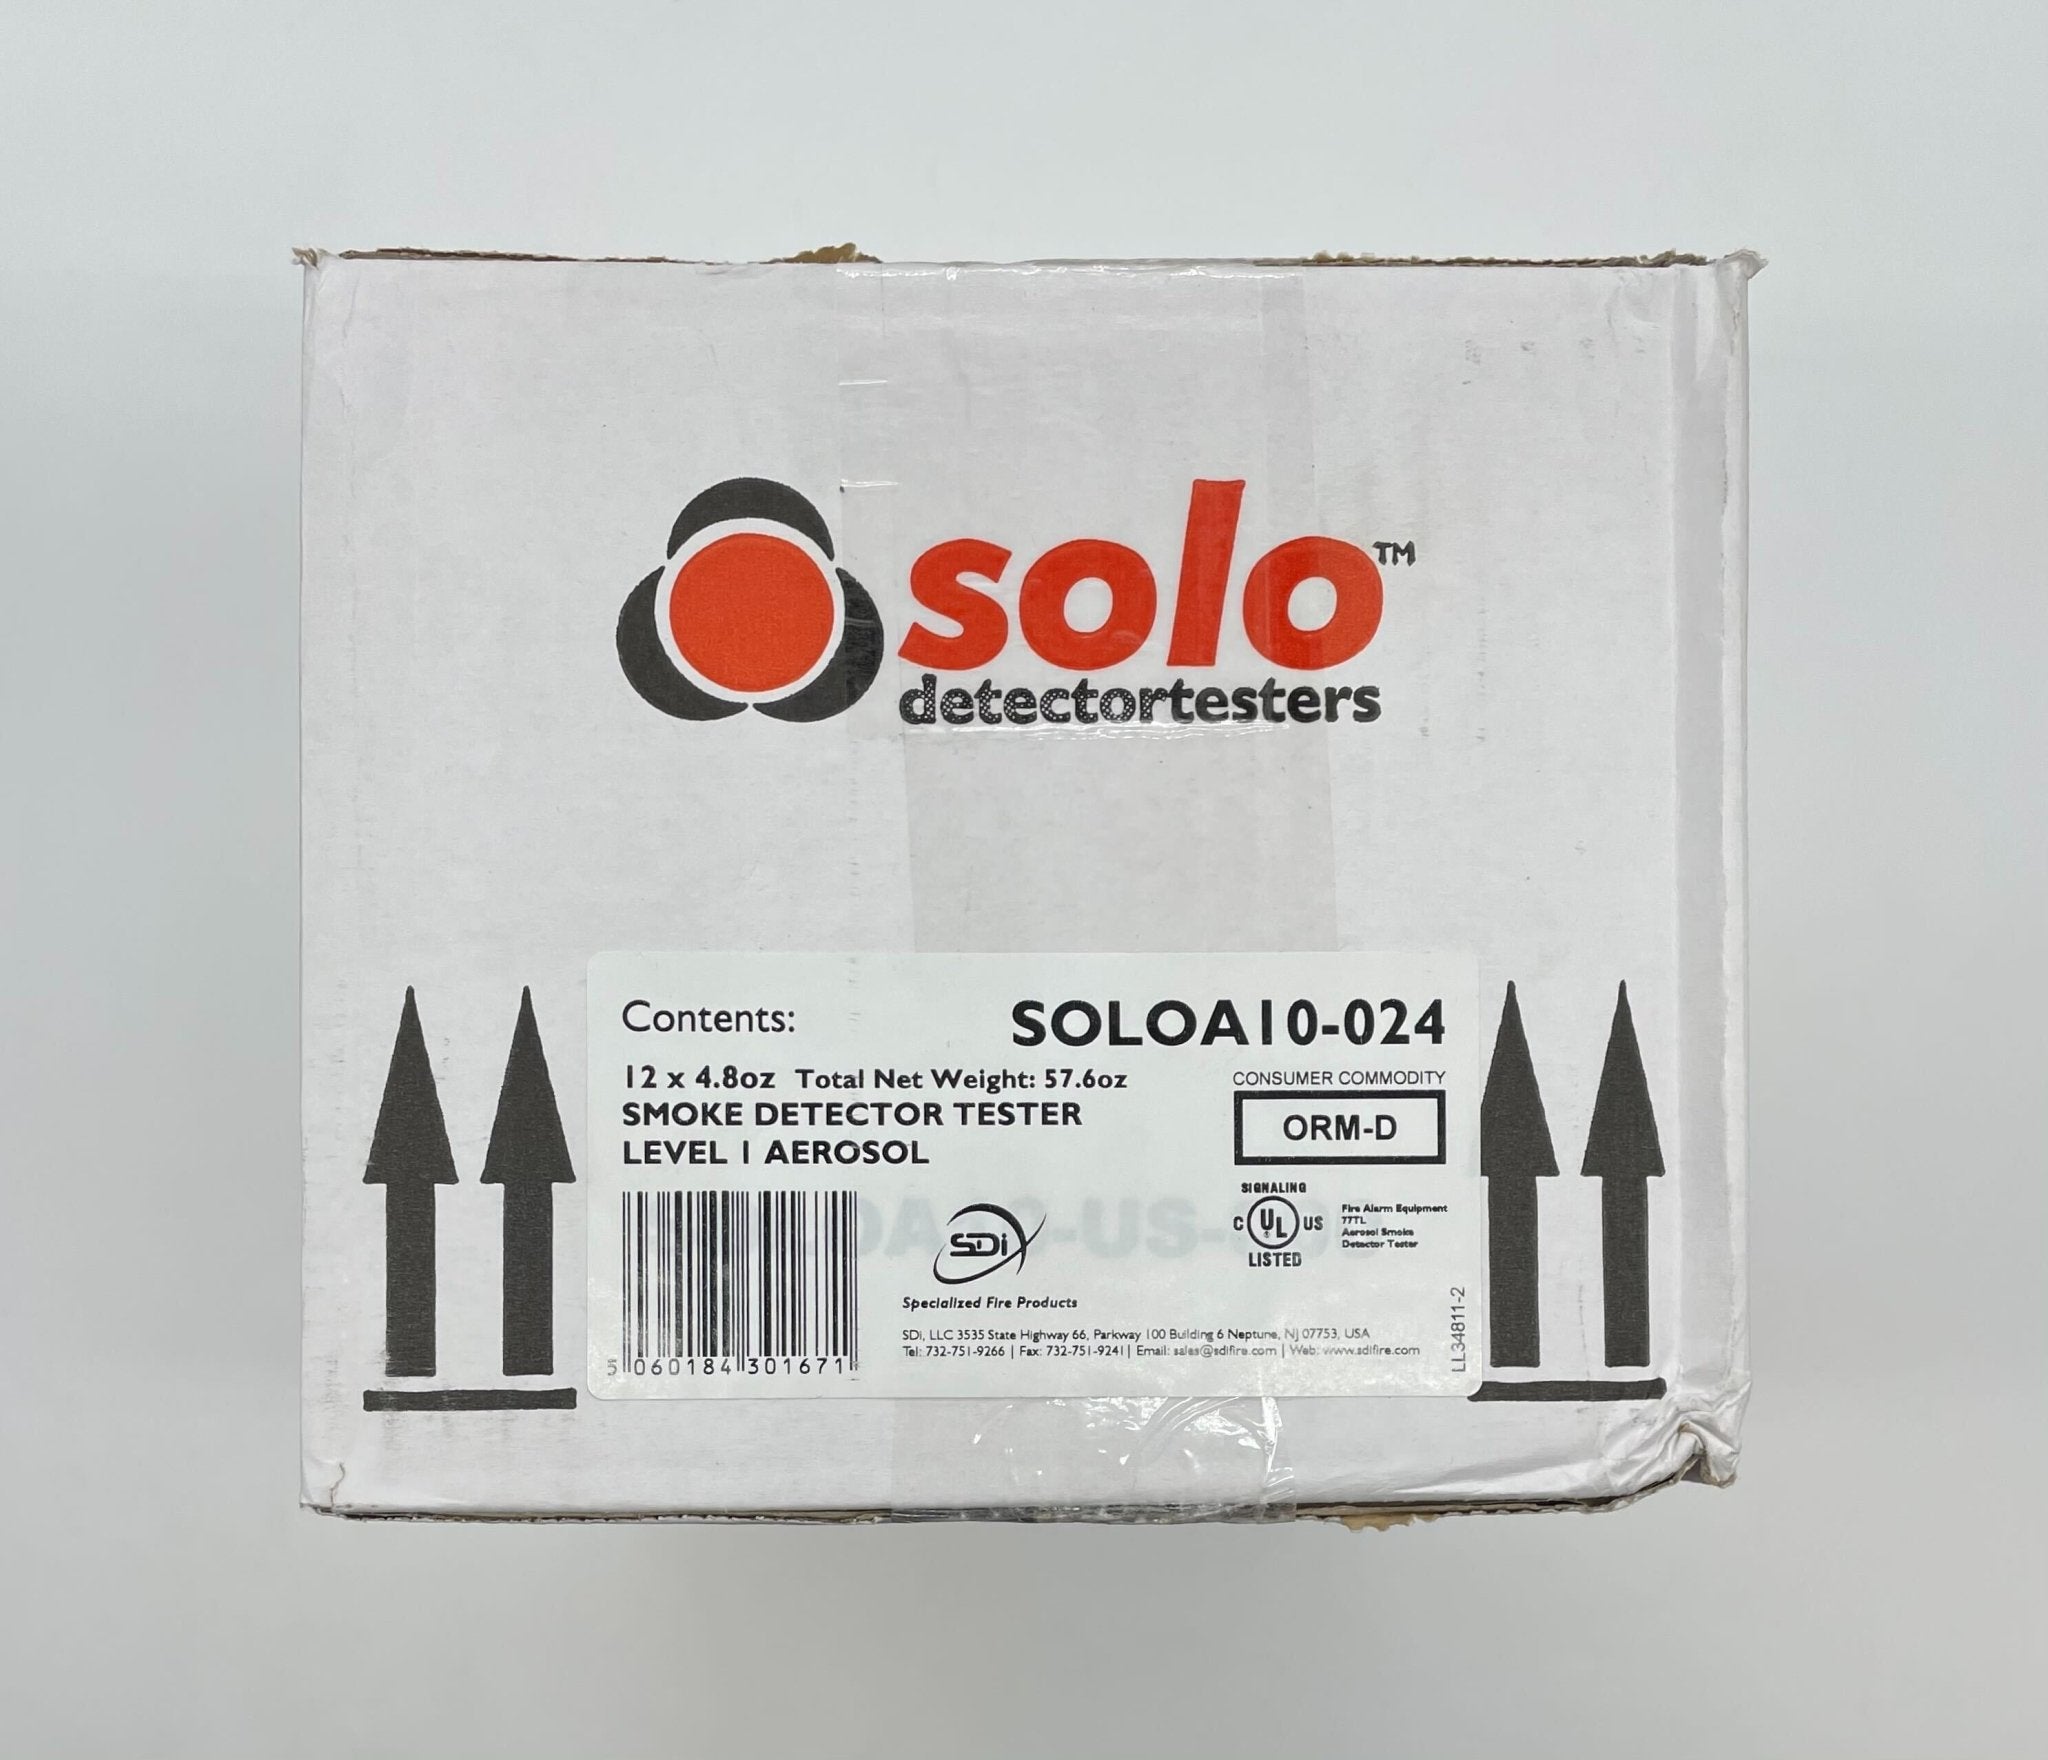 SDi SOLOA10 Aerosol Smoke Detector Tester - The Fire Alarm Supplier